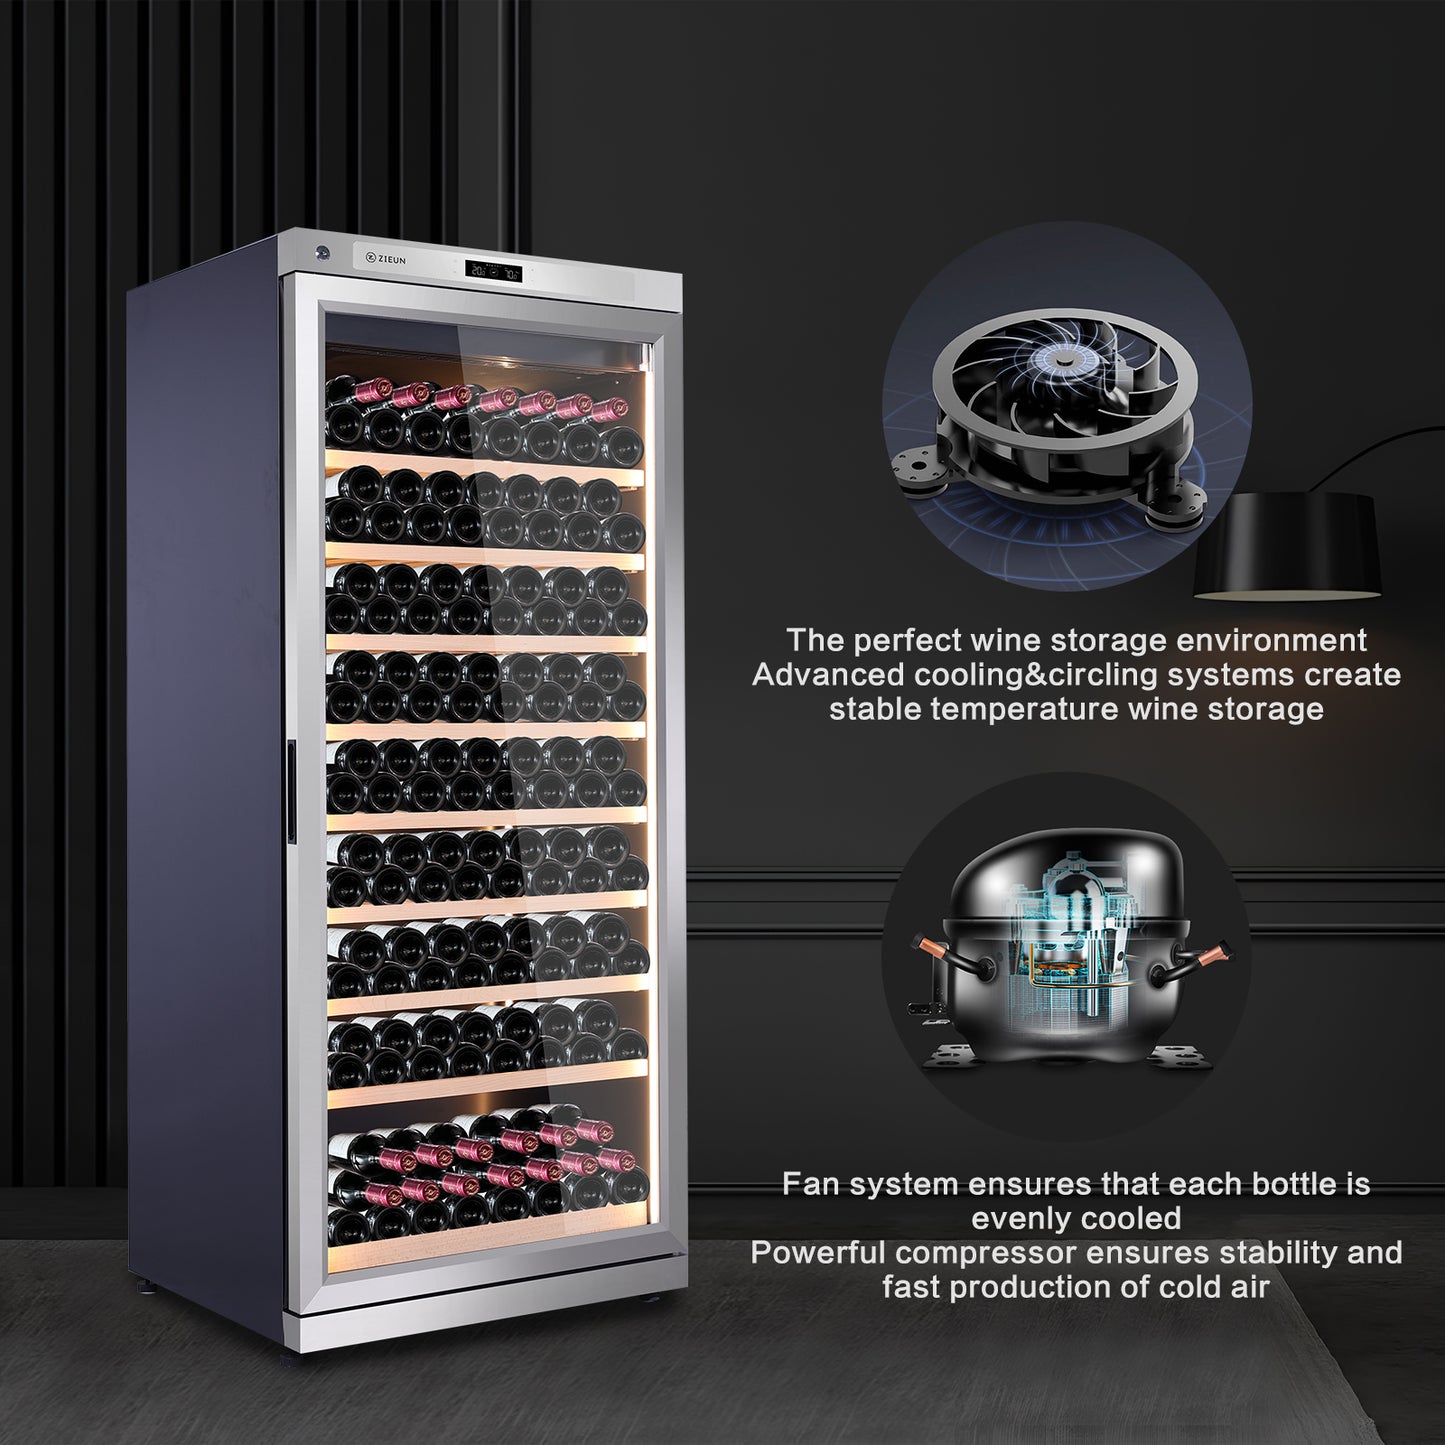 ZIEUN 357L Wine Cooler Refrigerator